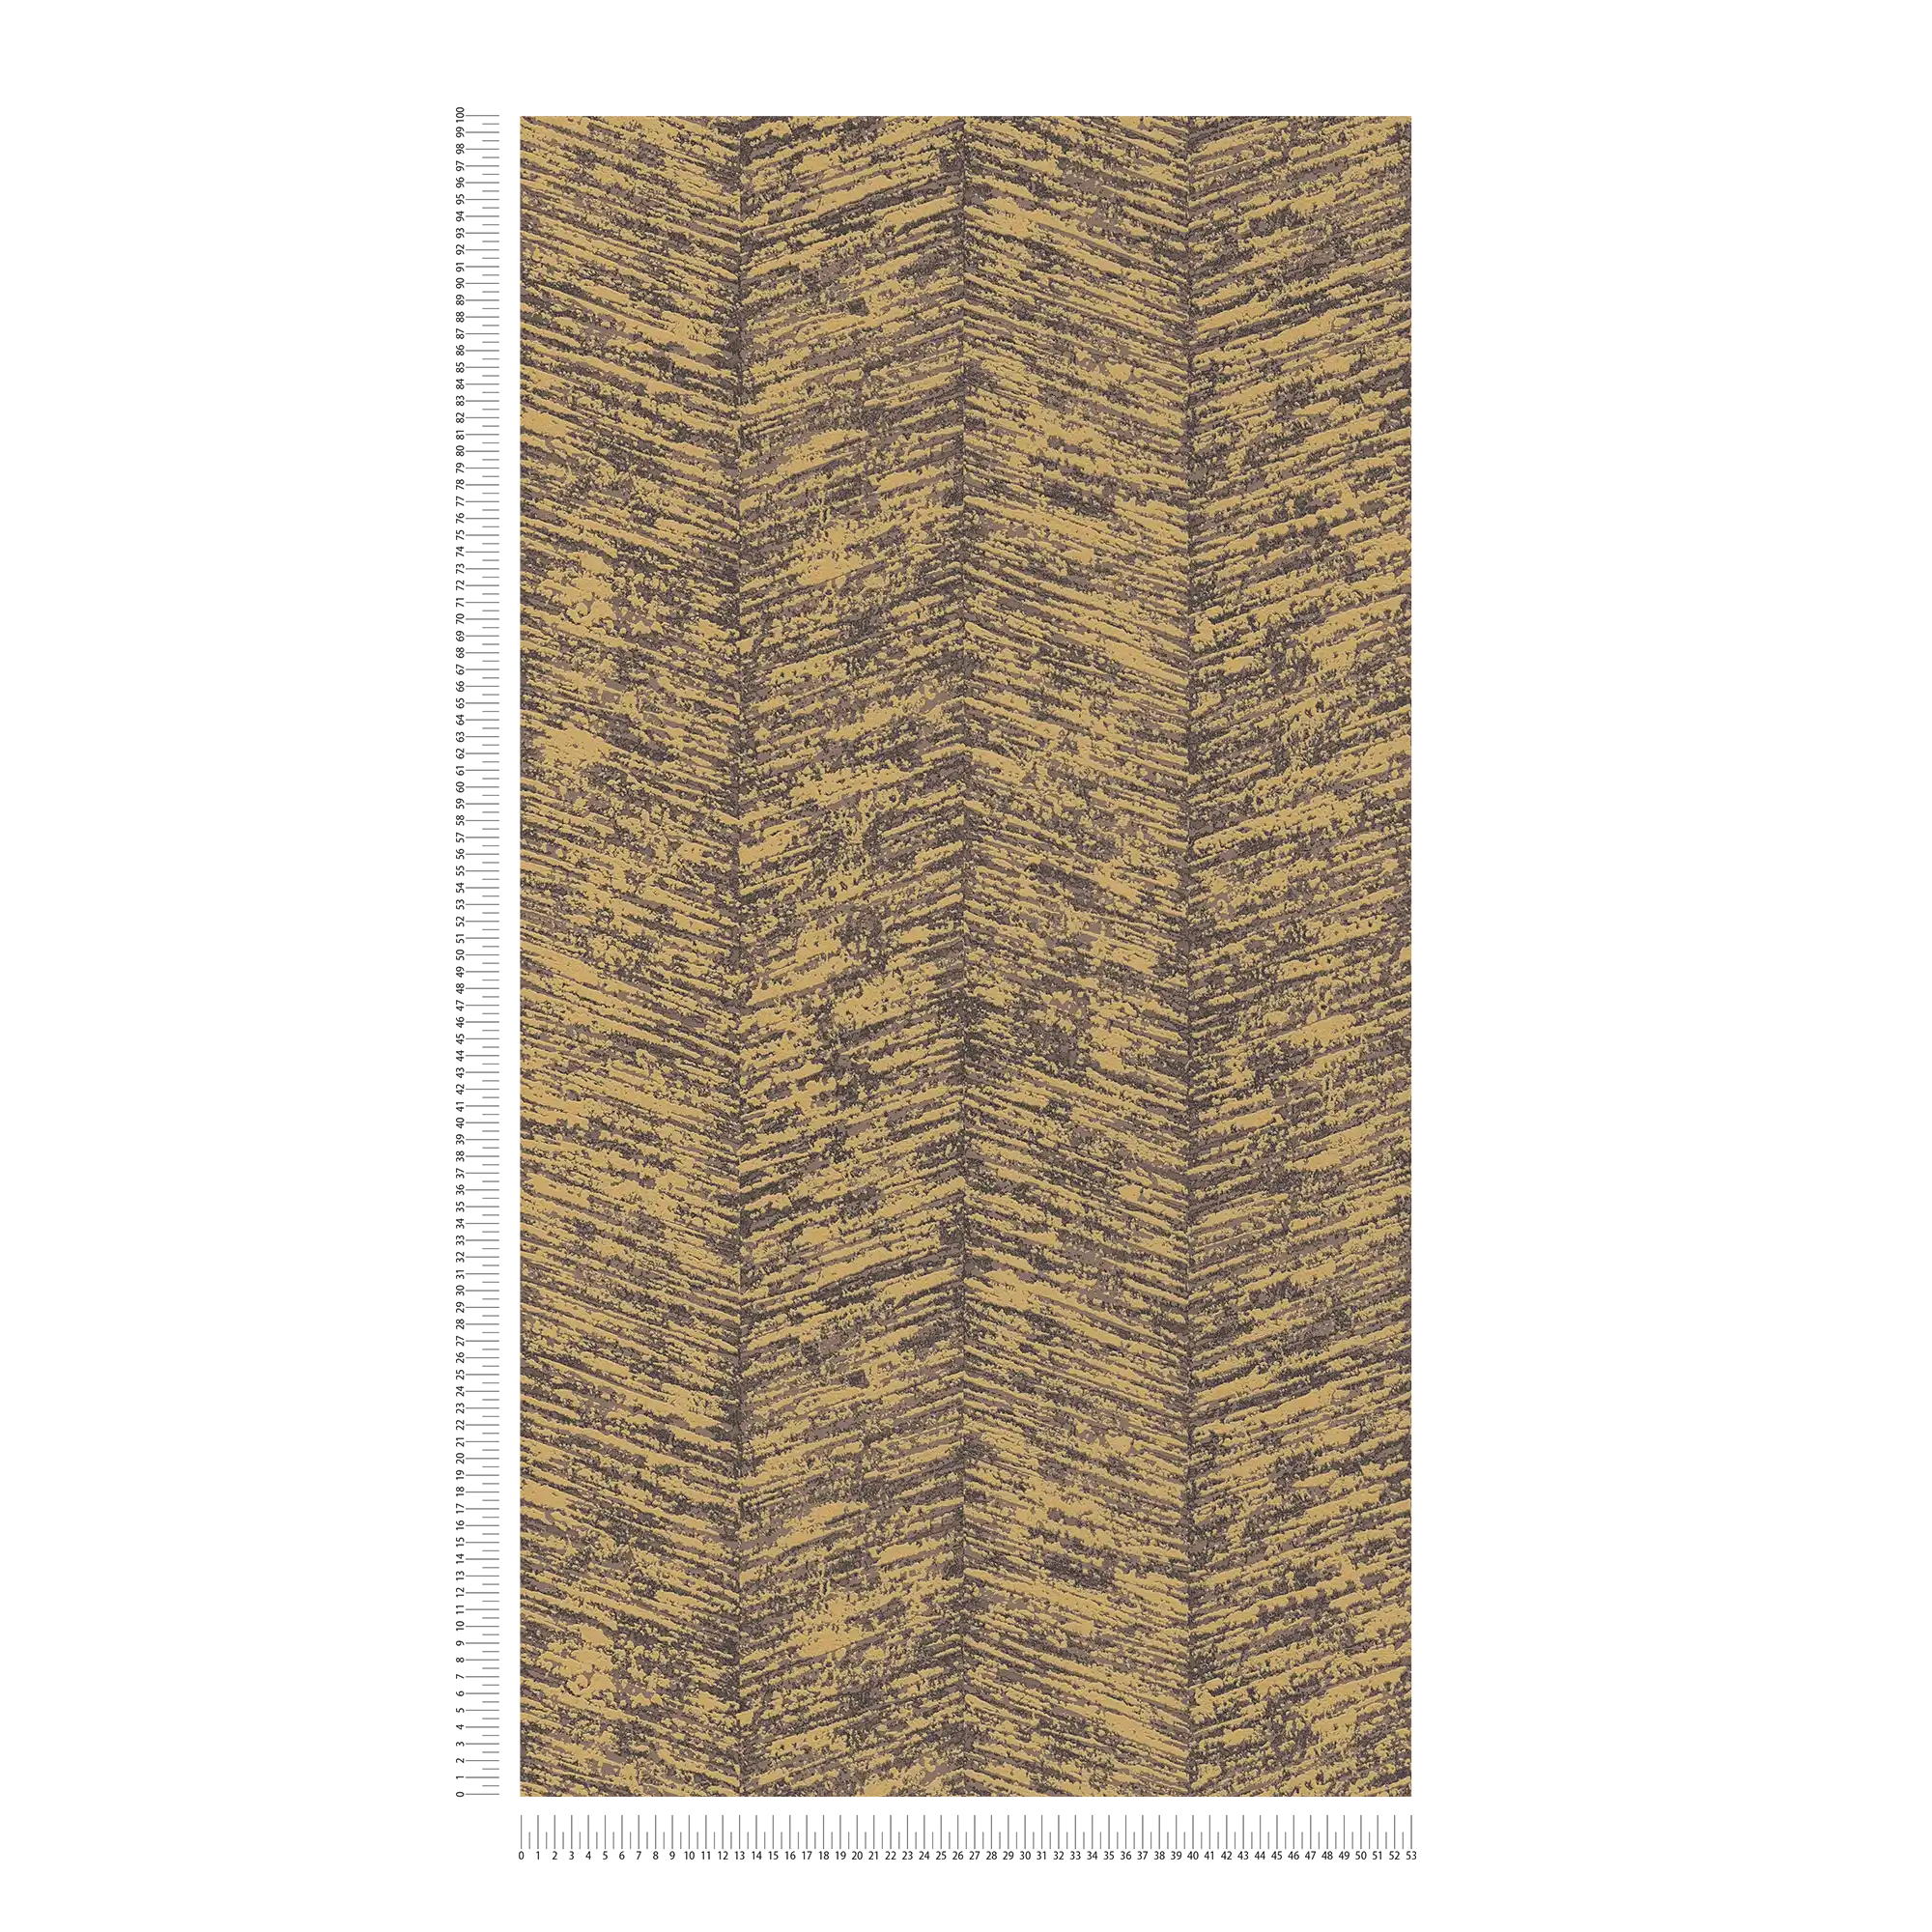             Textured wallpaper ethnic design with stripe effect - brown, metallic
        